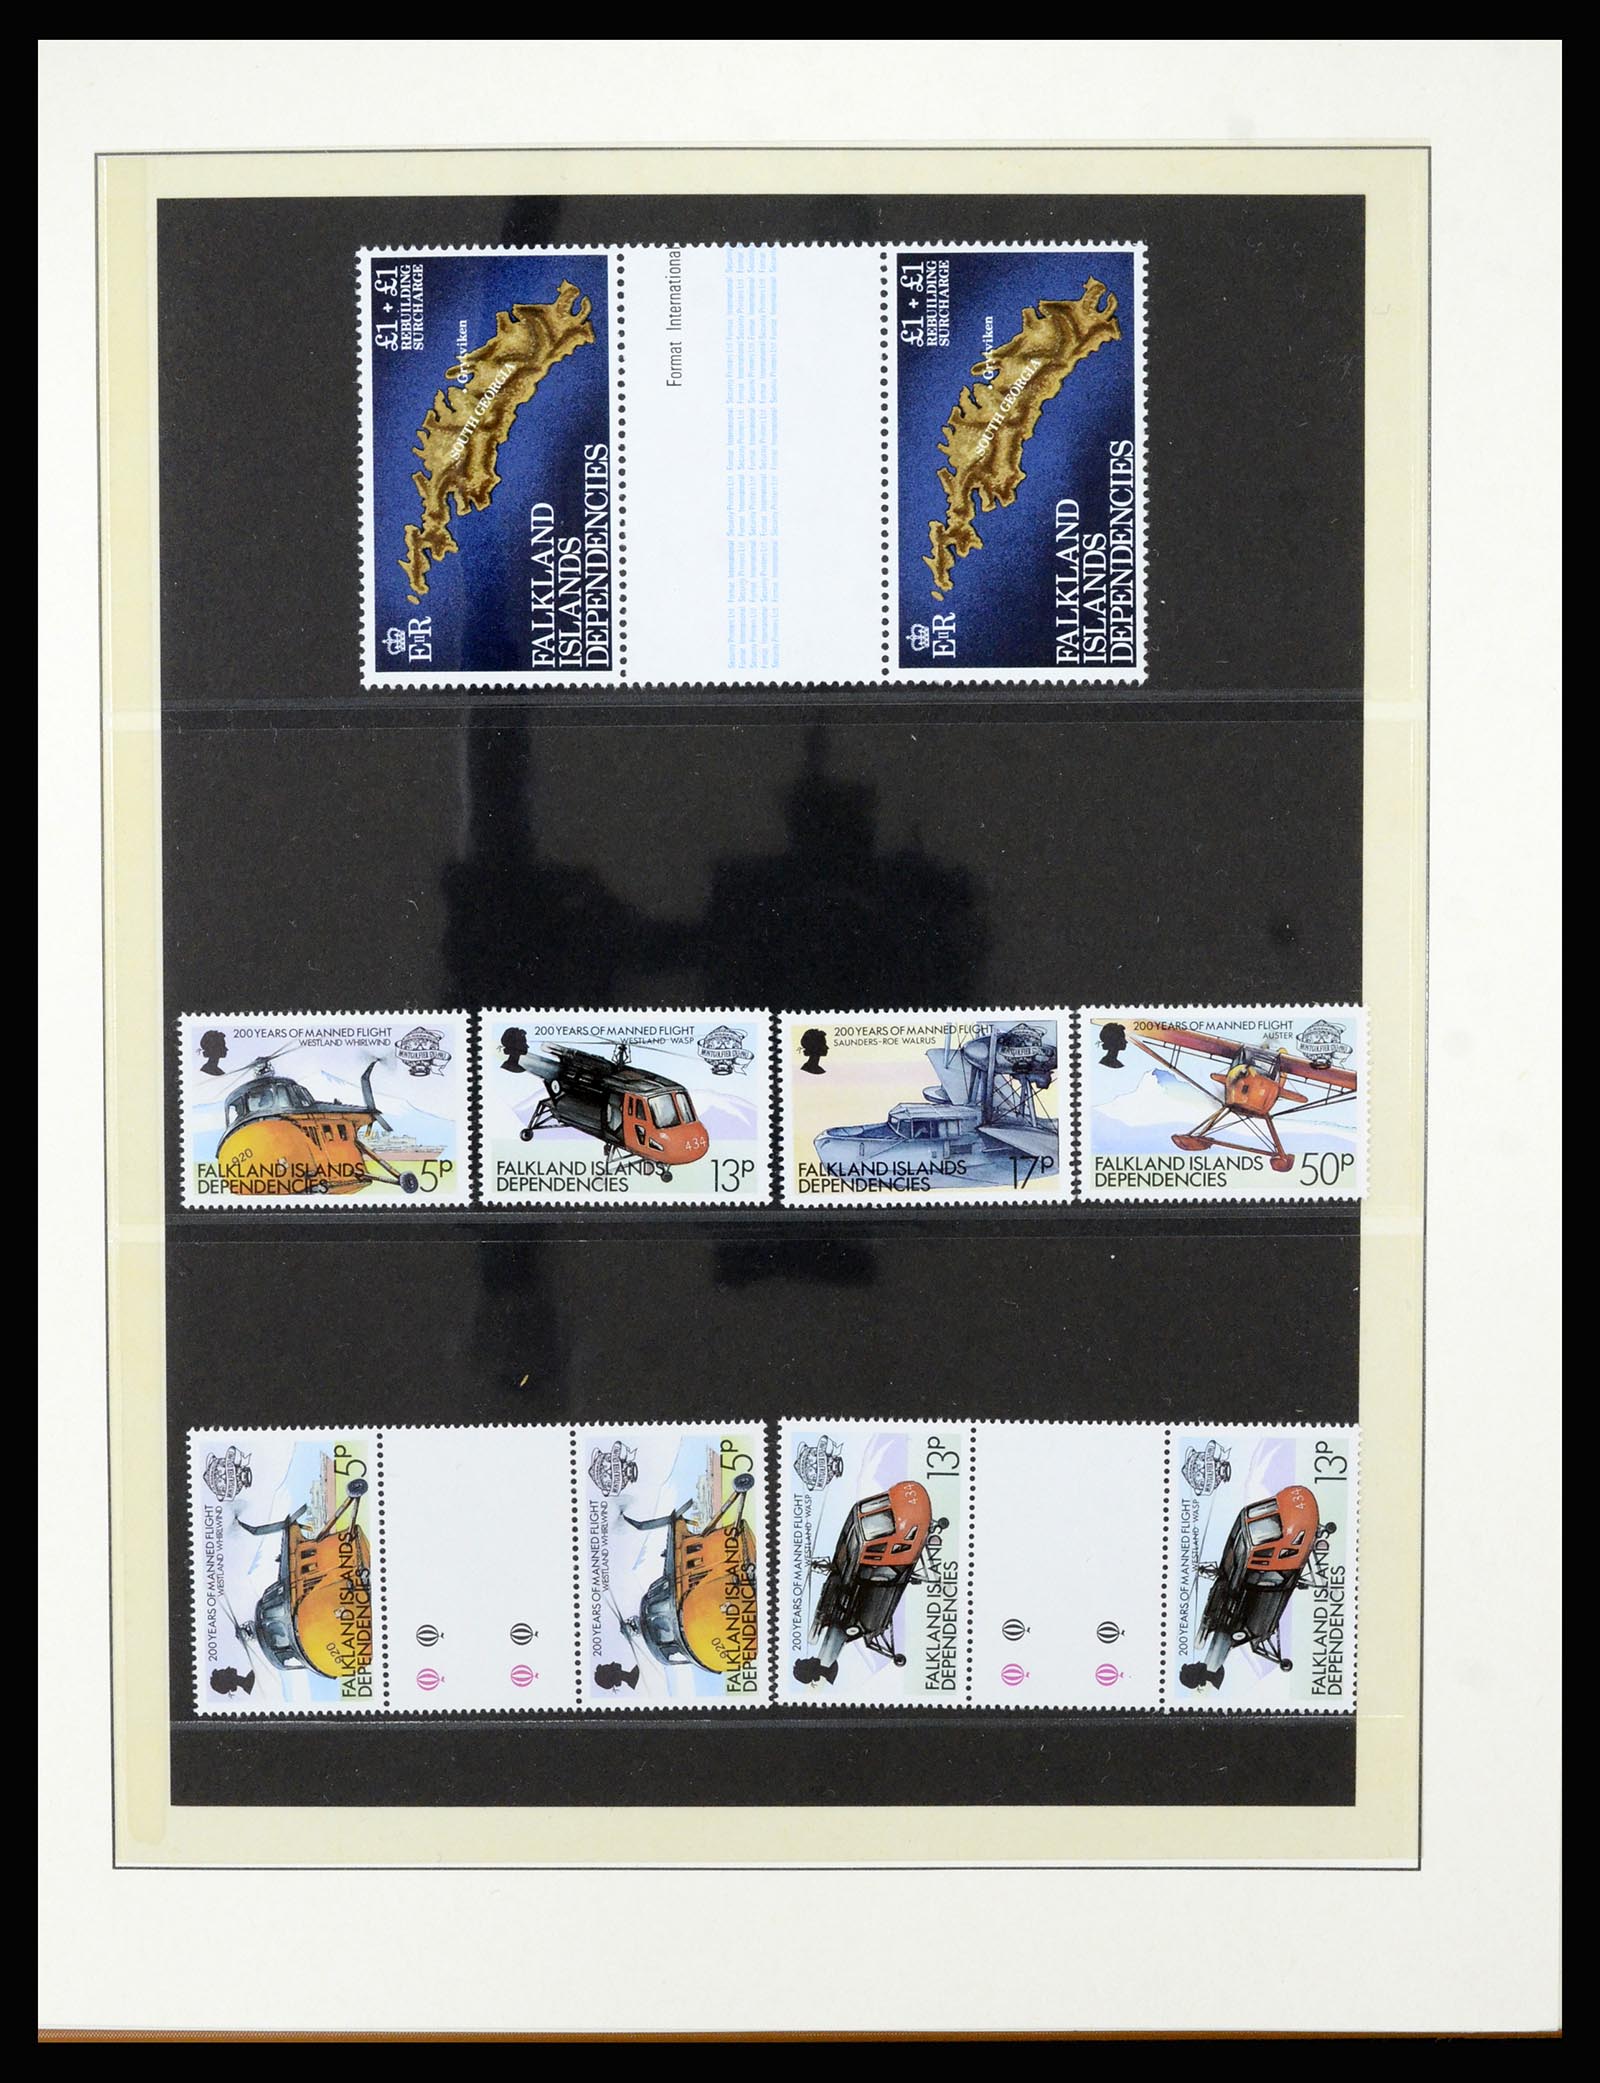 36929 018 - Stamp collection 36929 Falkland Islands dependencies 1944-1997.